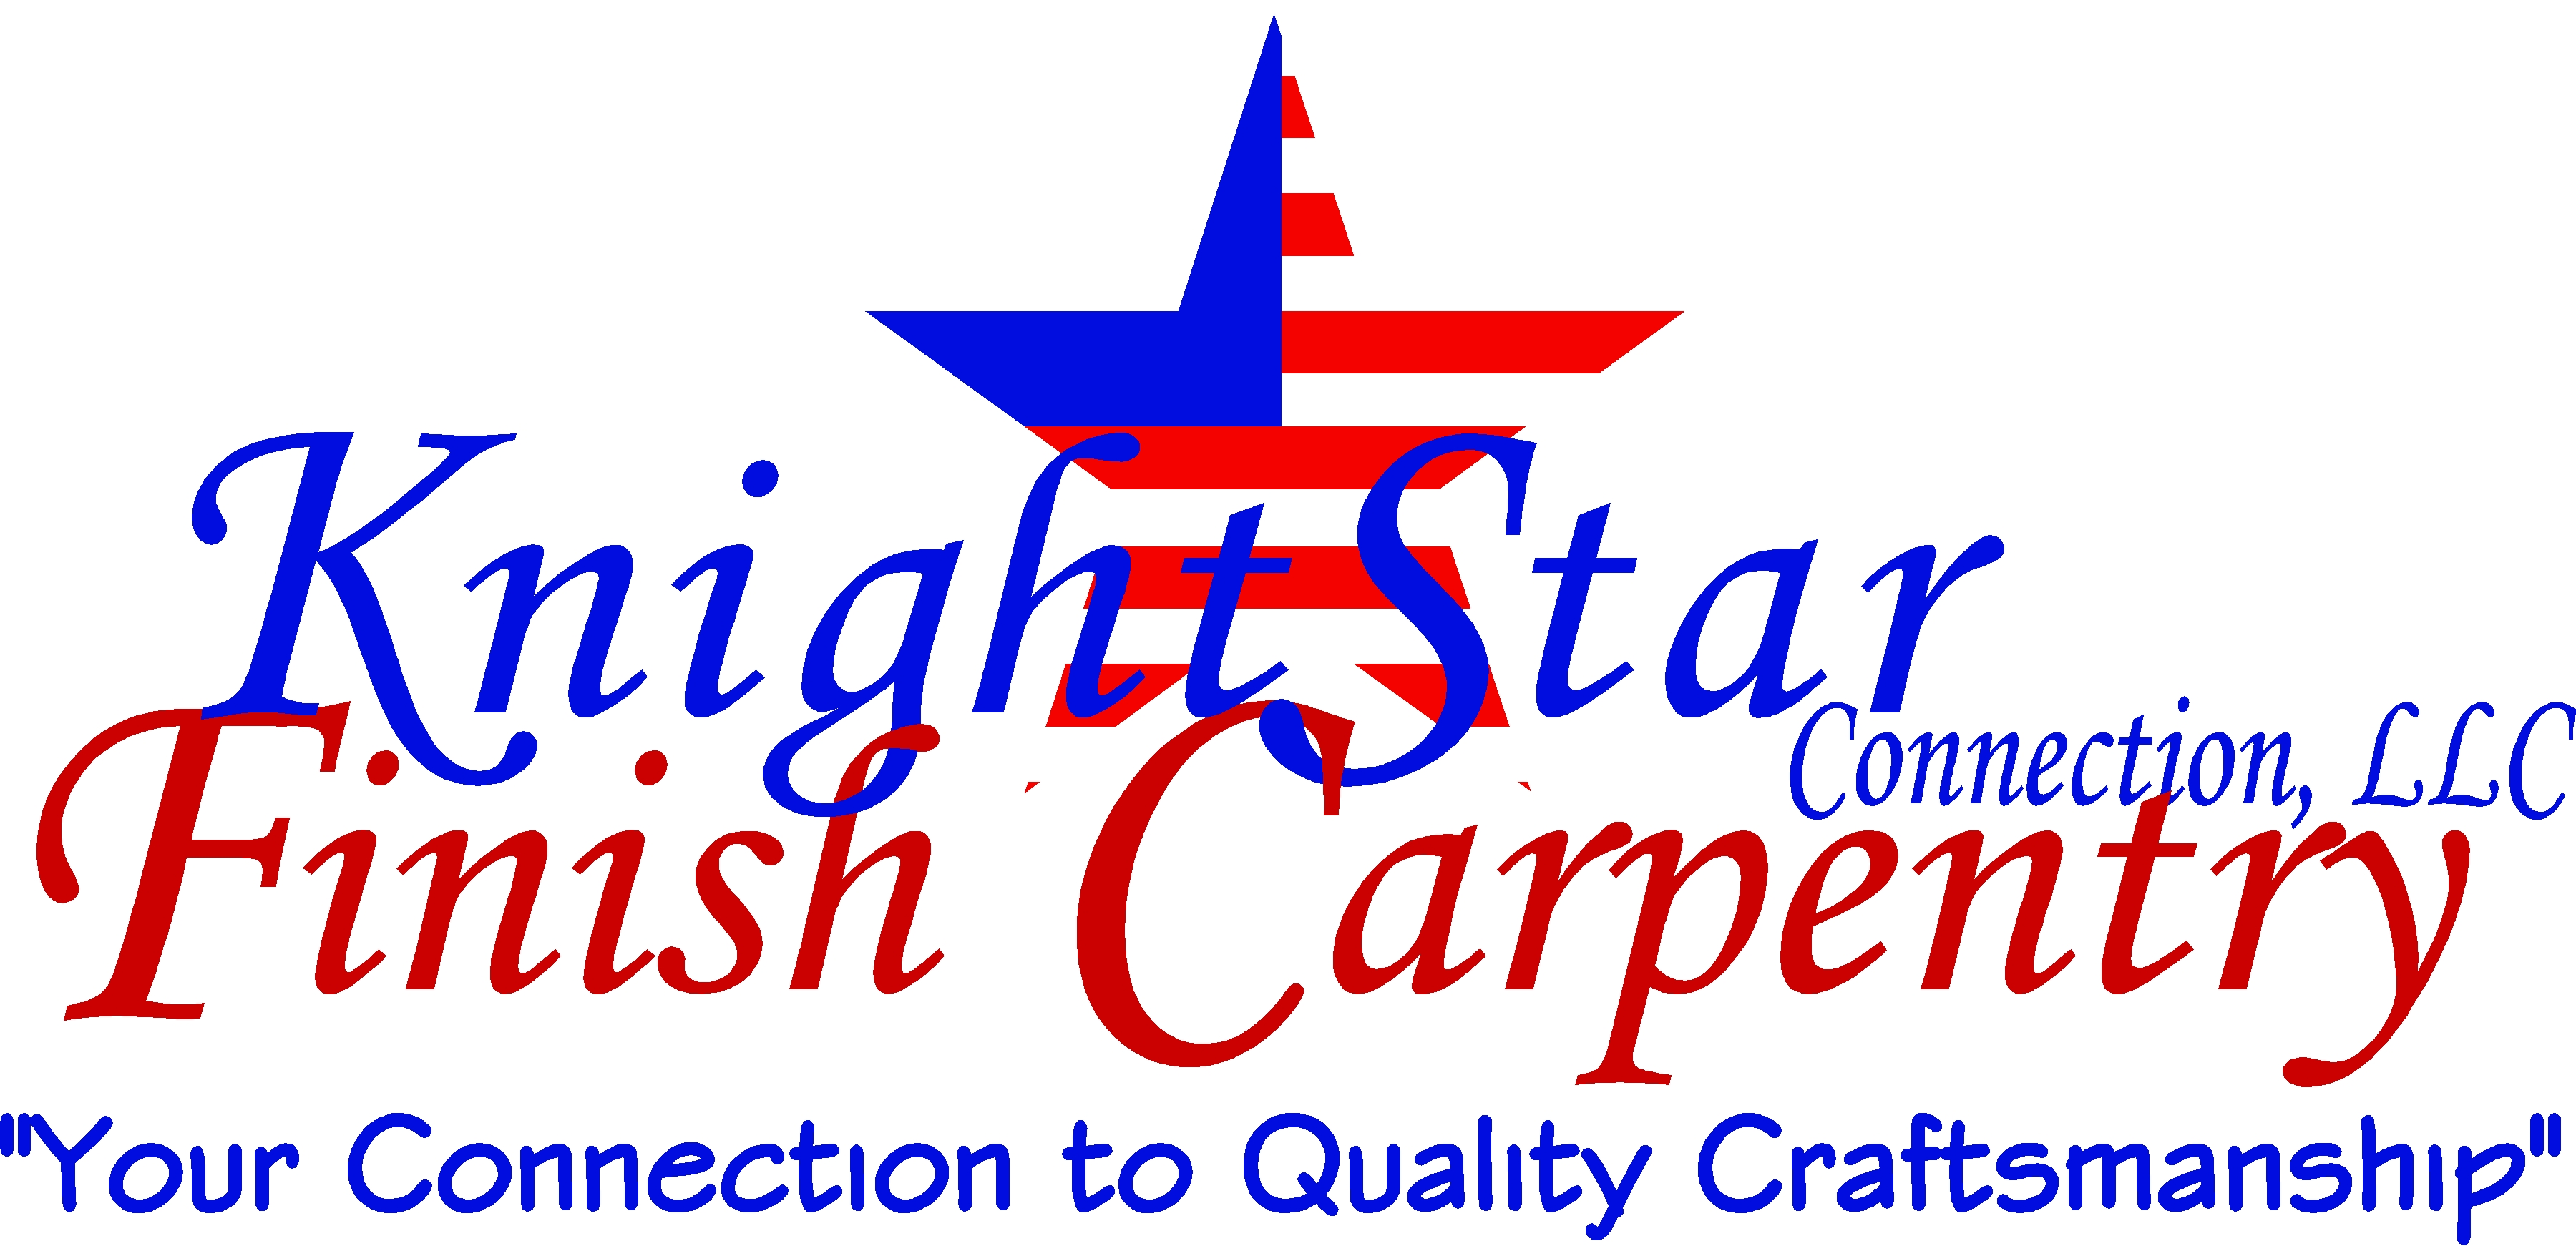 KnightStar Connection, LLC Logo